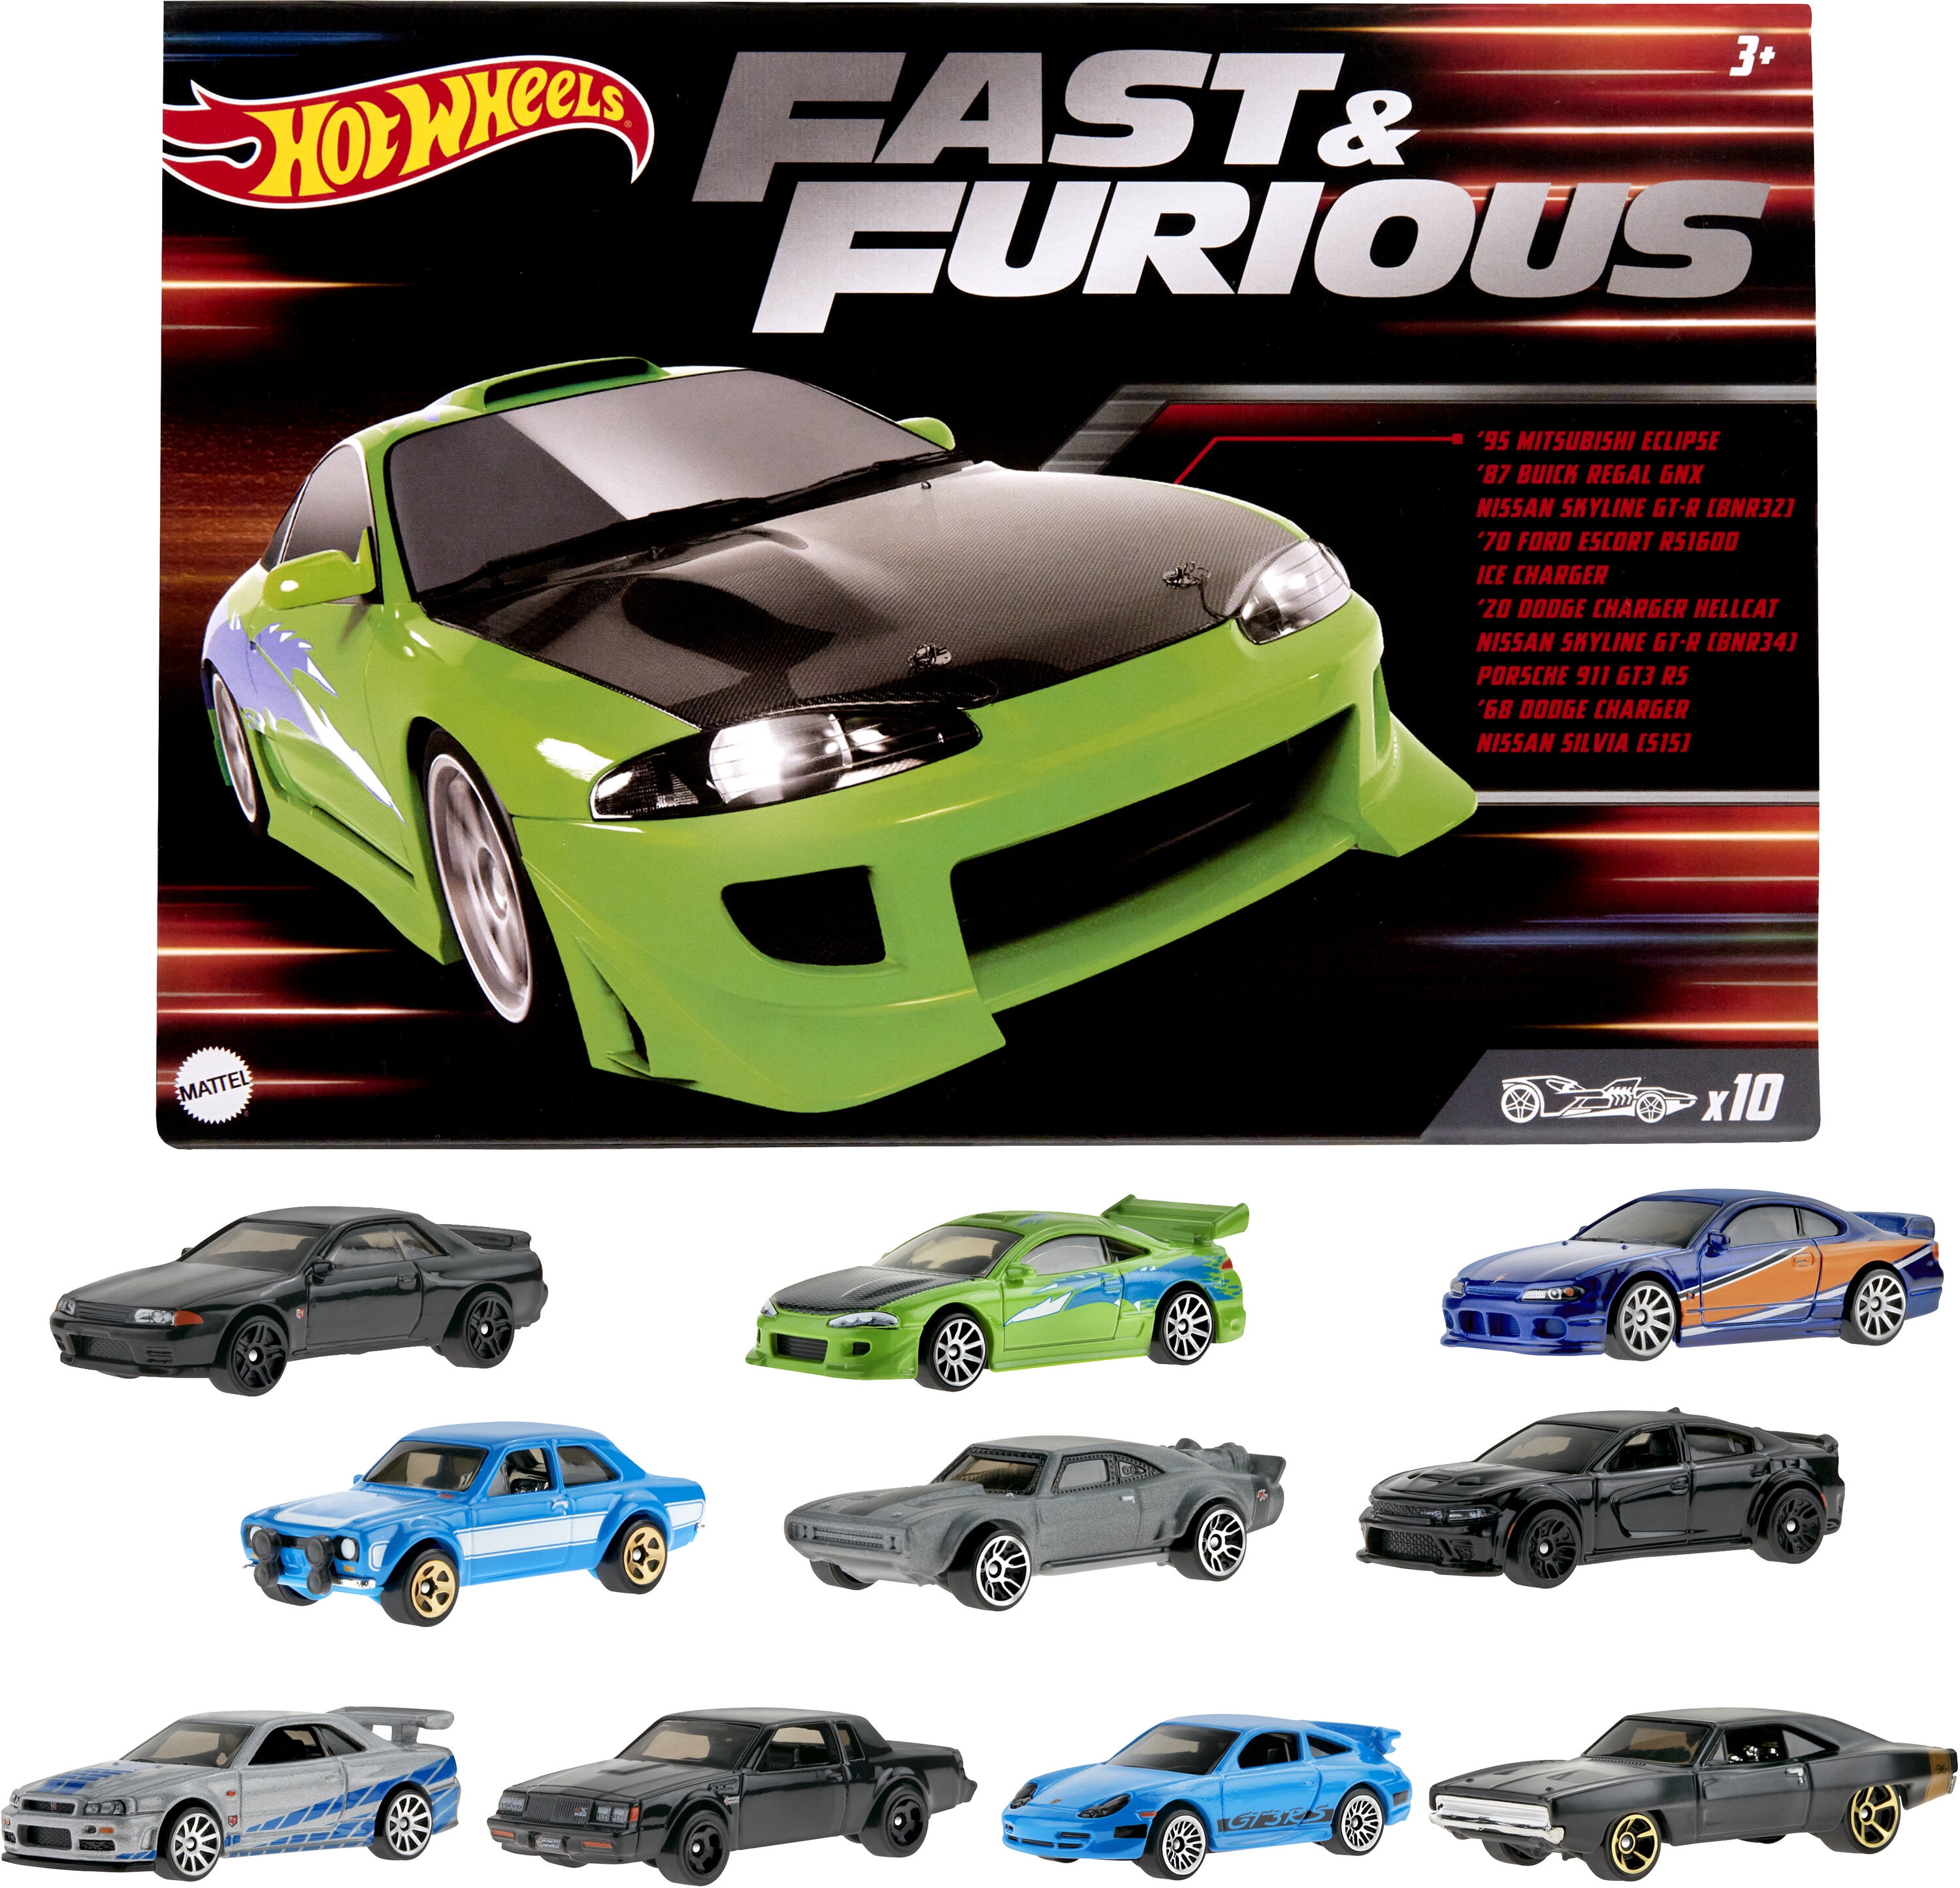 Mattel Hot Wheels Fast and Furious Vehicle Assortment